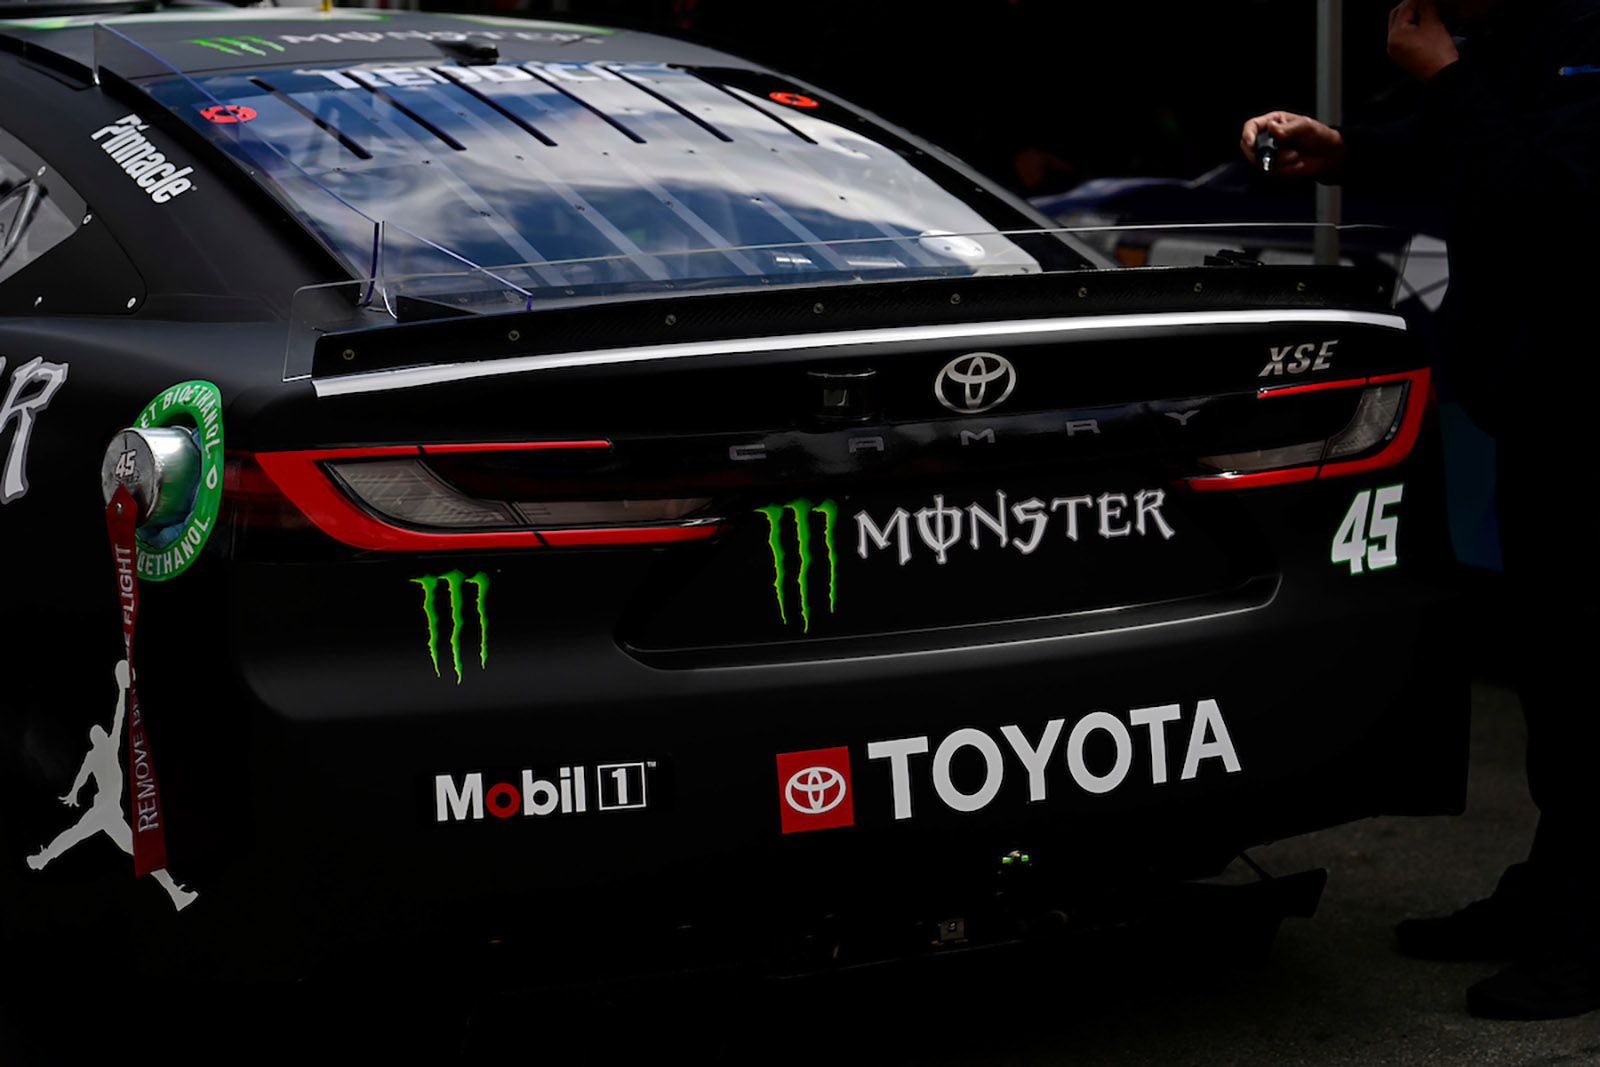 Tyler Reddick 2024 Monster Energy paint scheme NASCAR Cup Series 23XI Racing